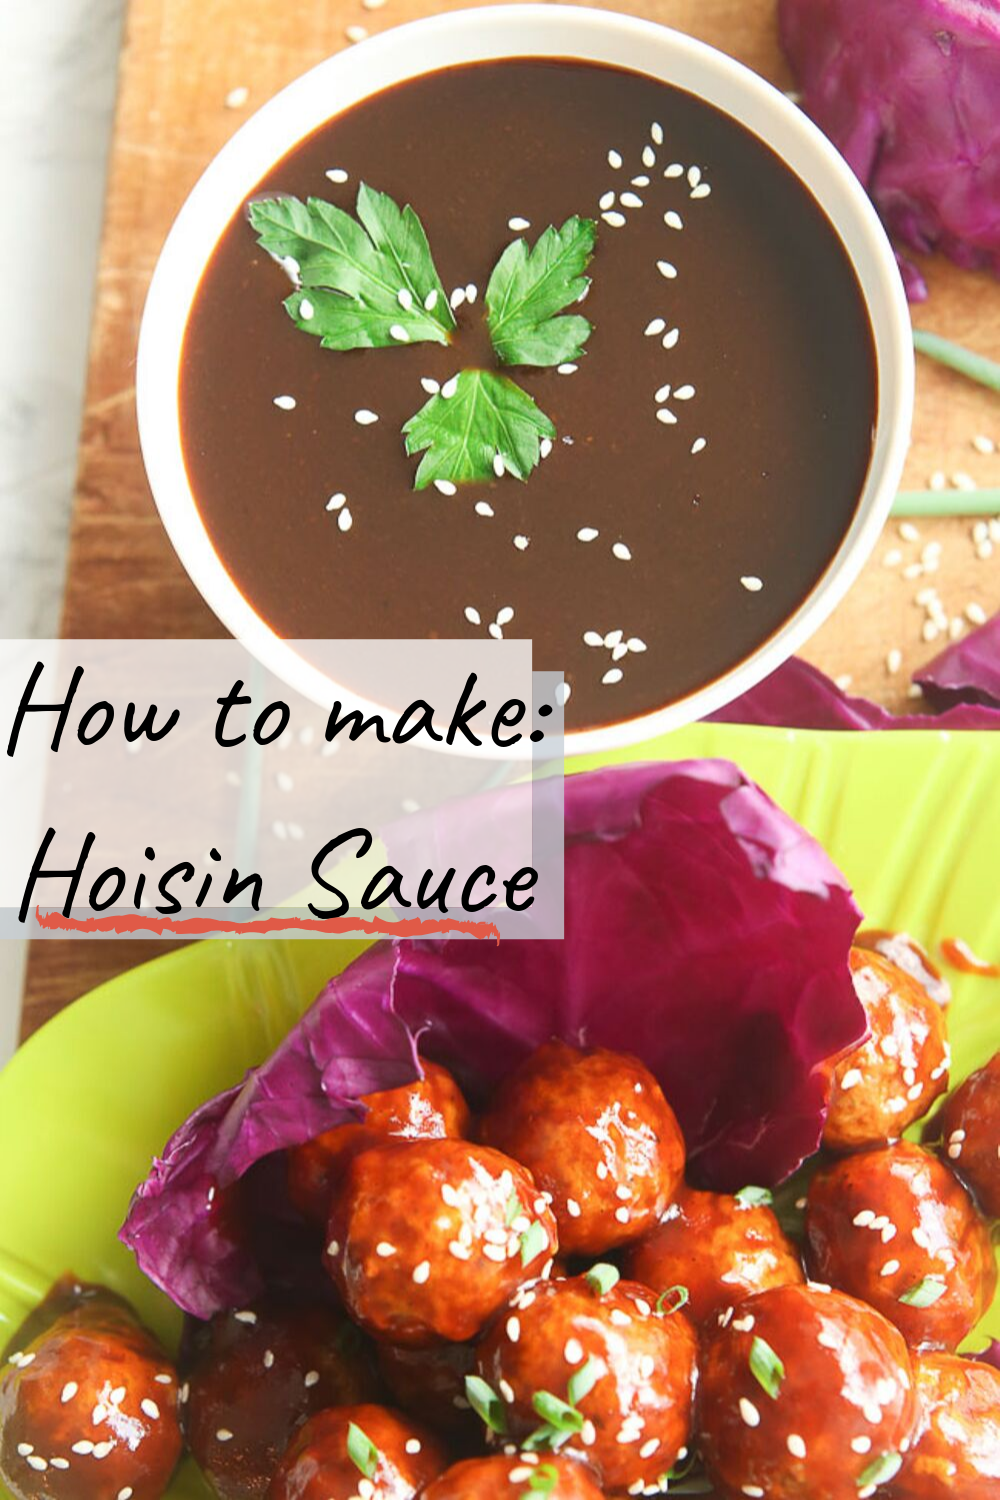 Homemade Hoisin Sauce Recipe - Cook Homey